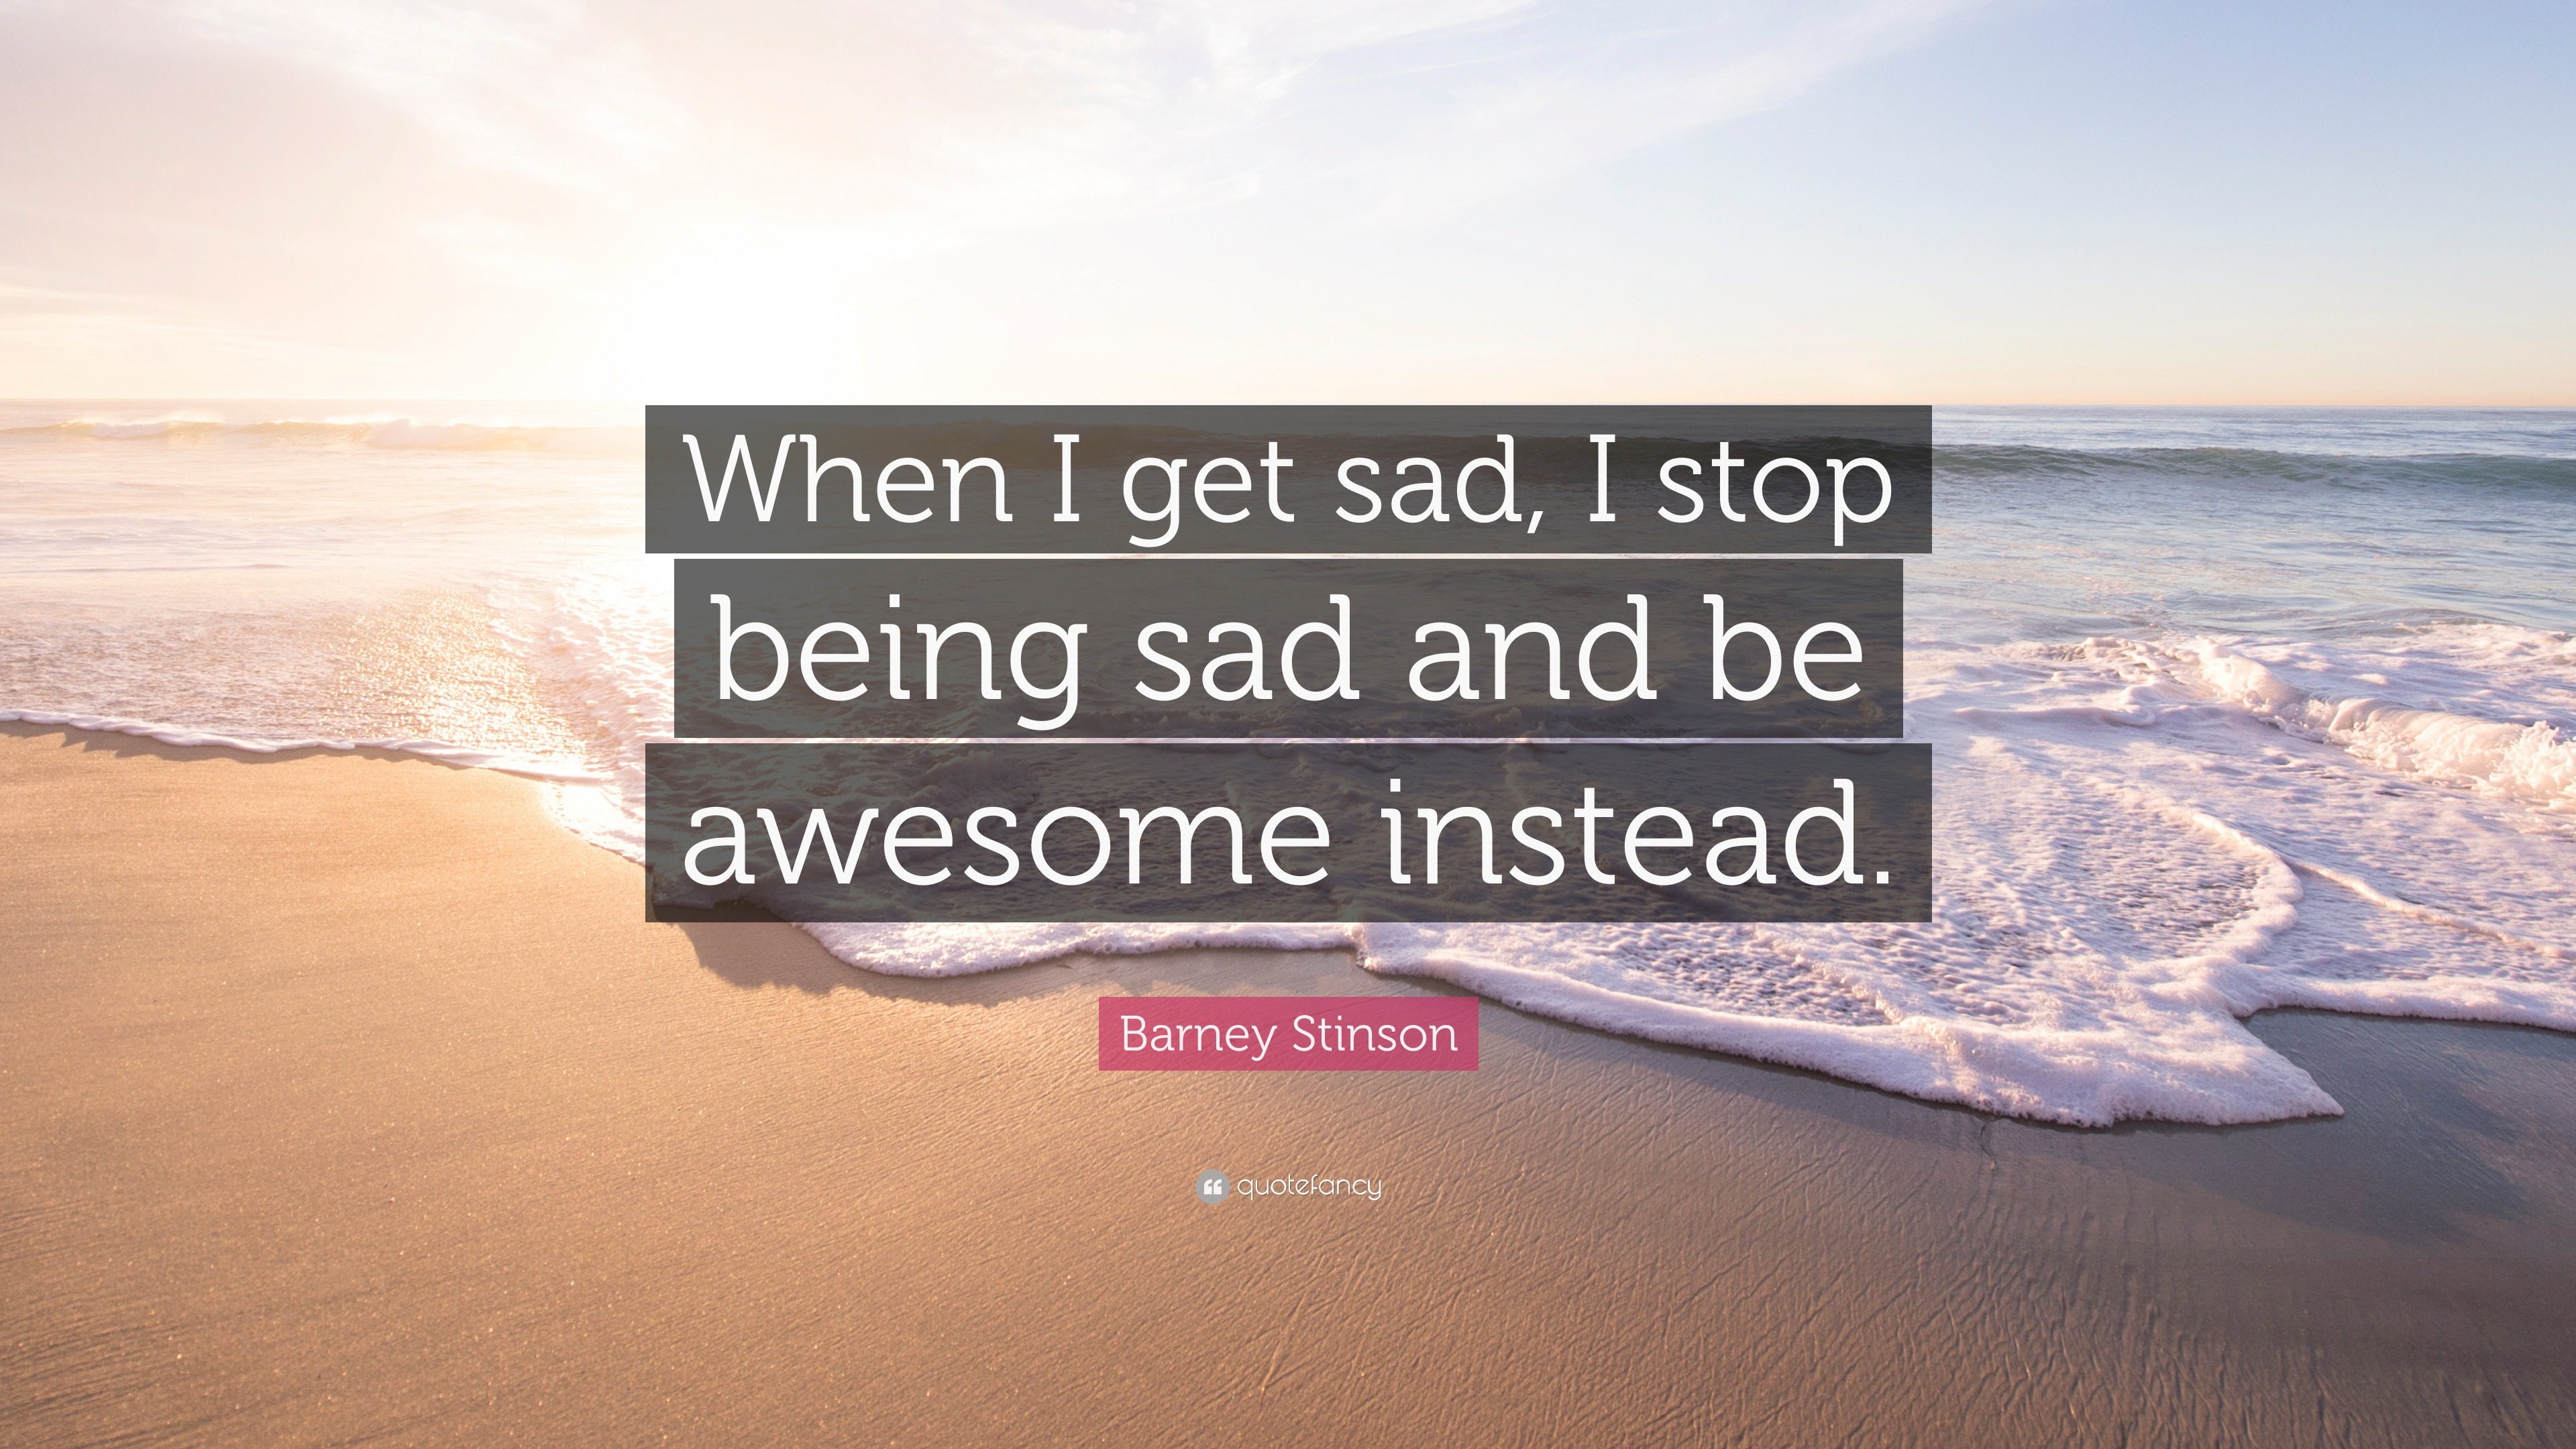 If sad, be awesome